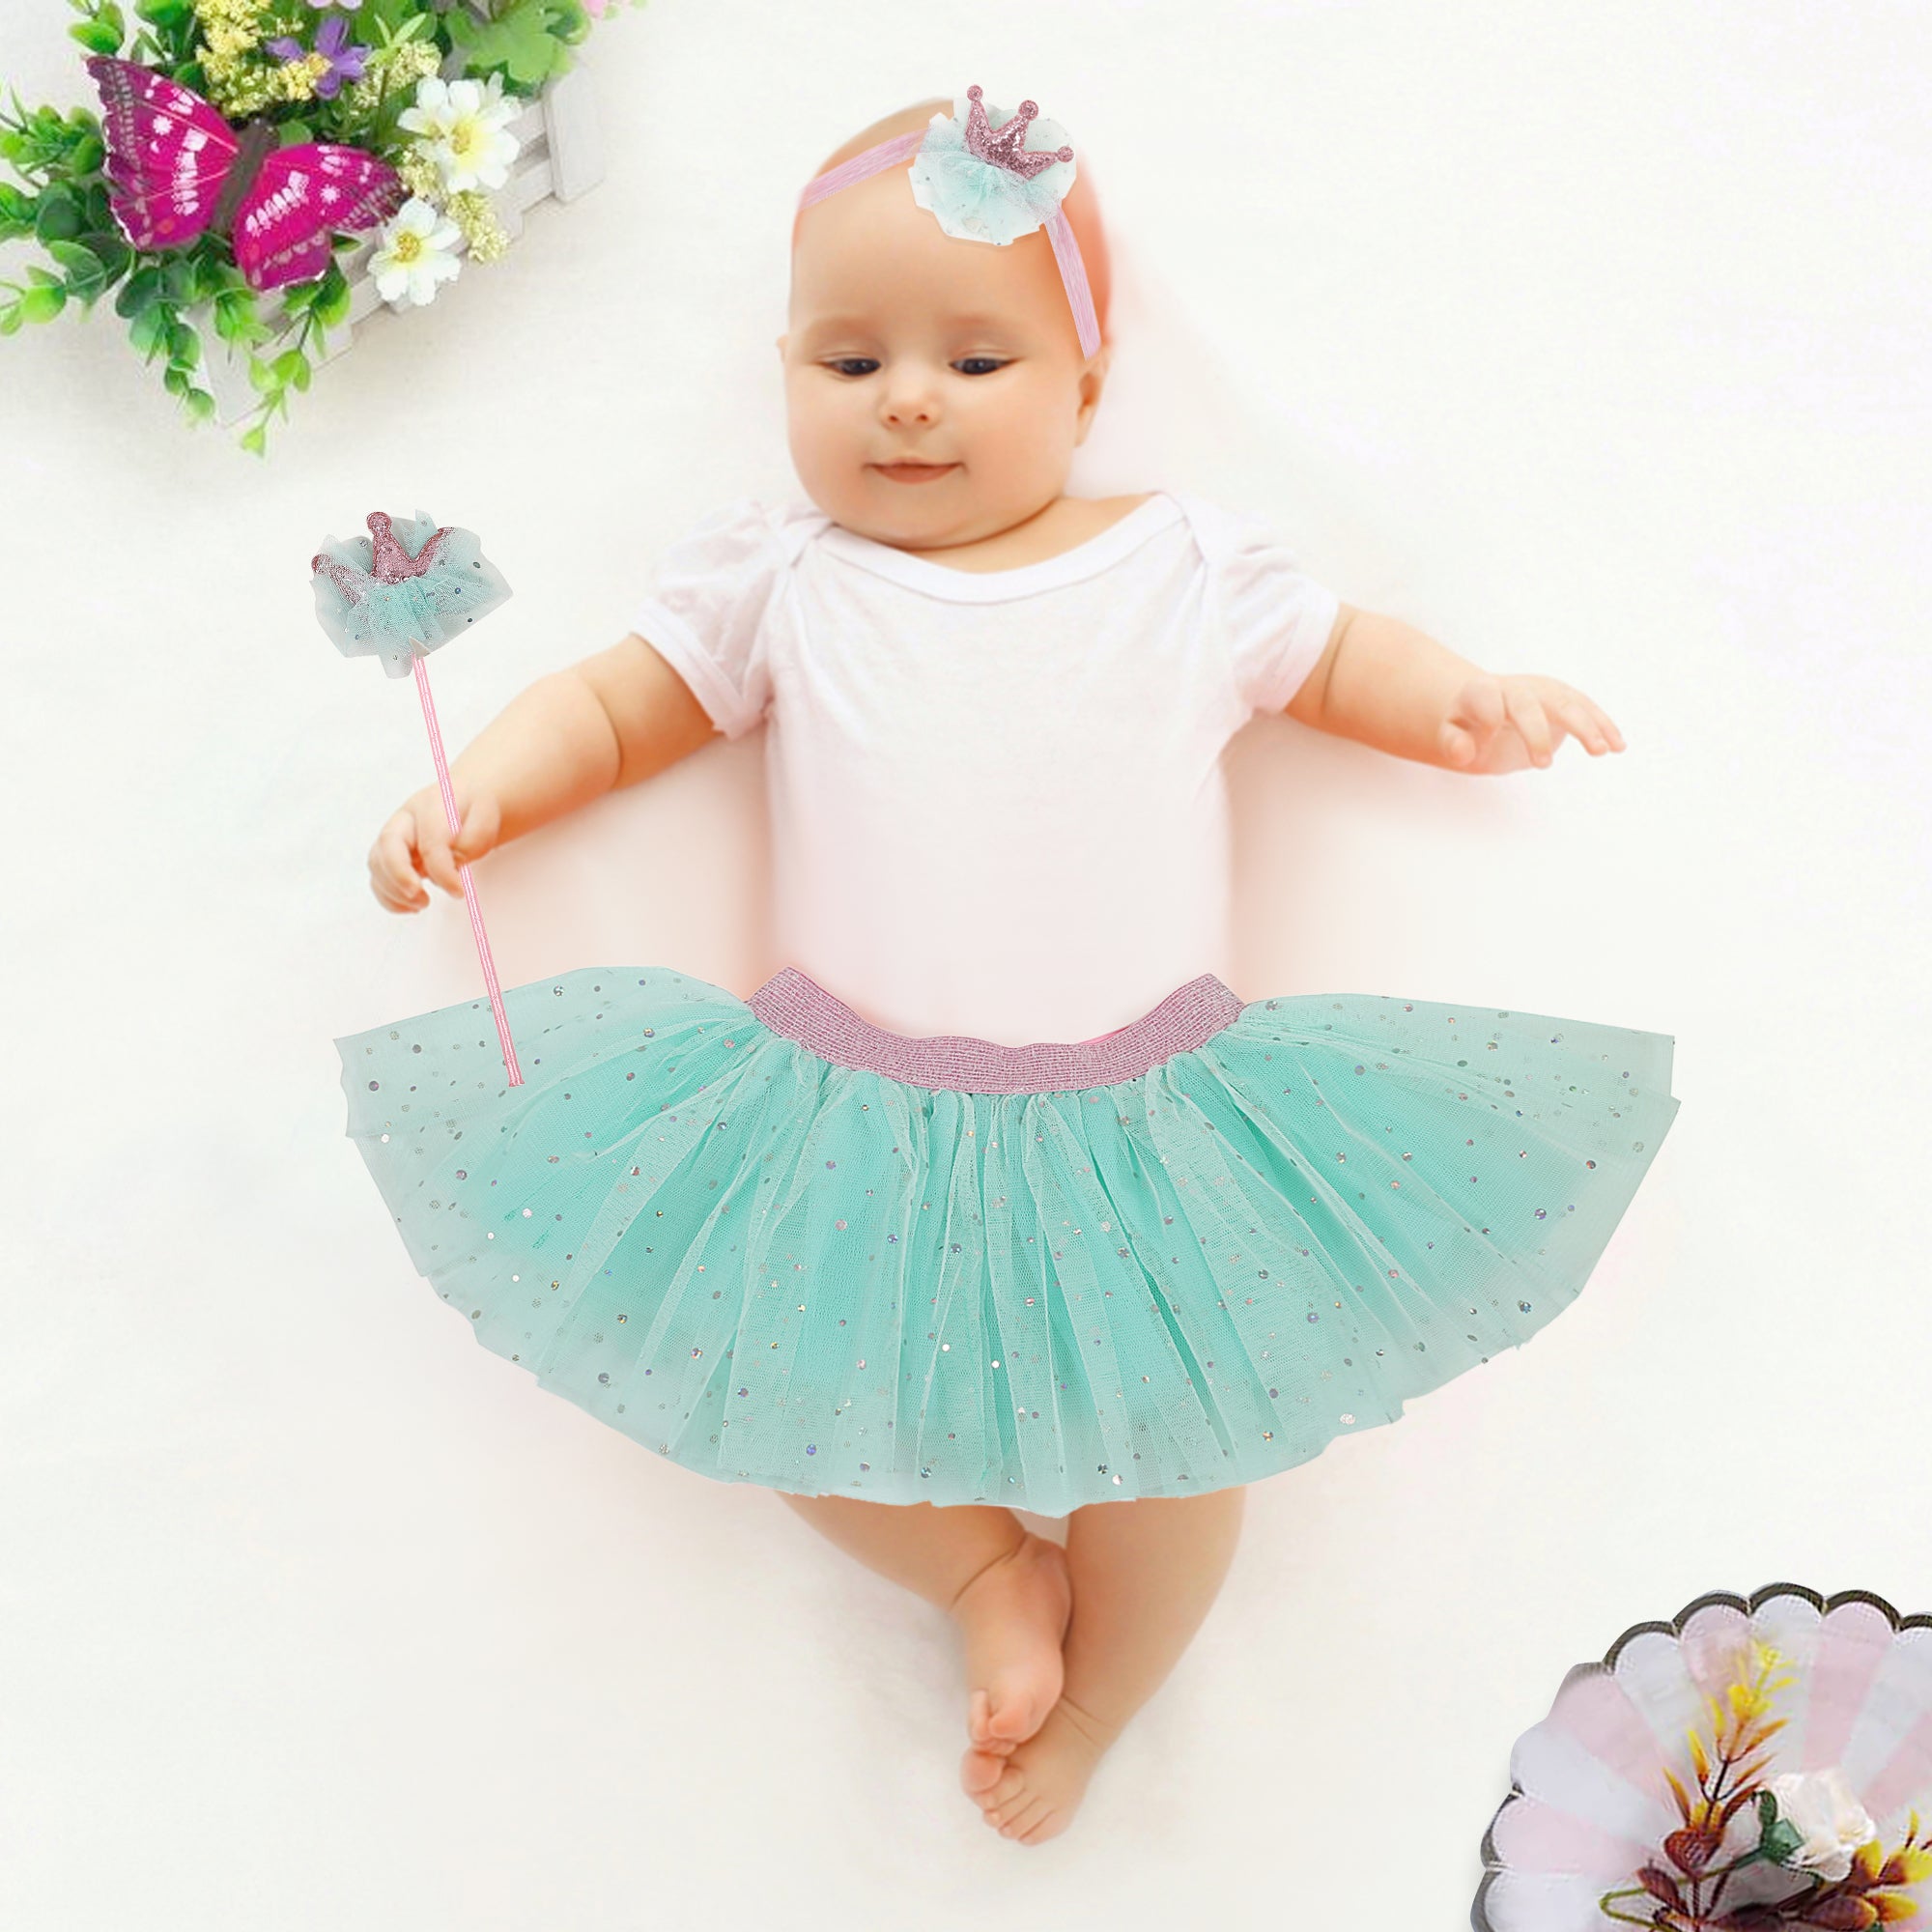 Icy Princess Blue Tutu Skirt And Accessory Set - Baby Moo